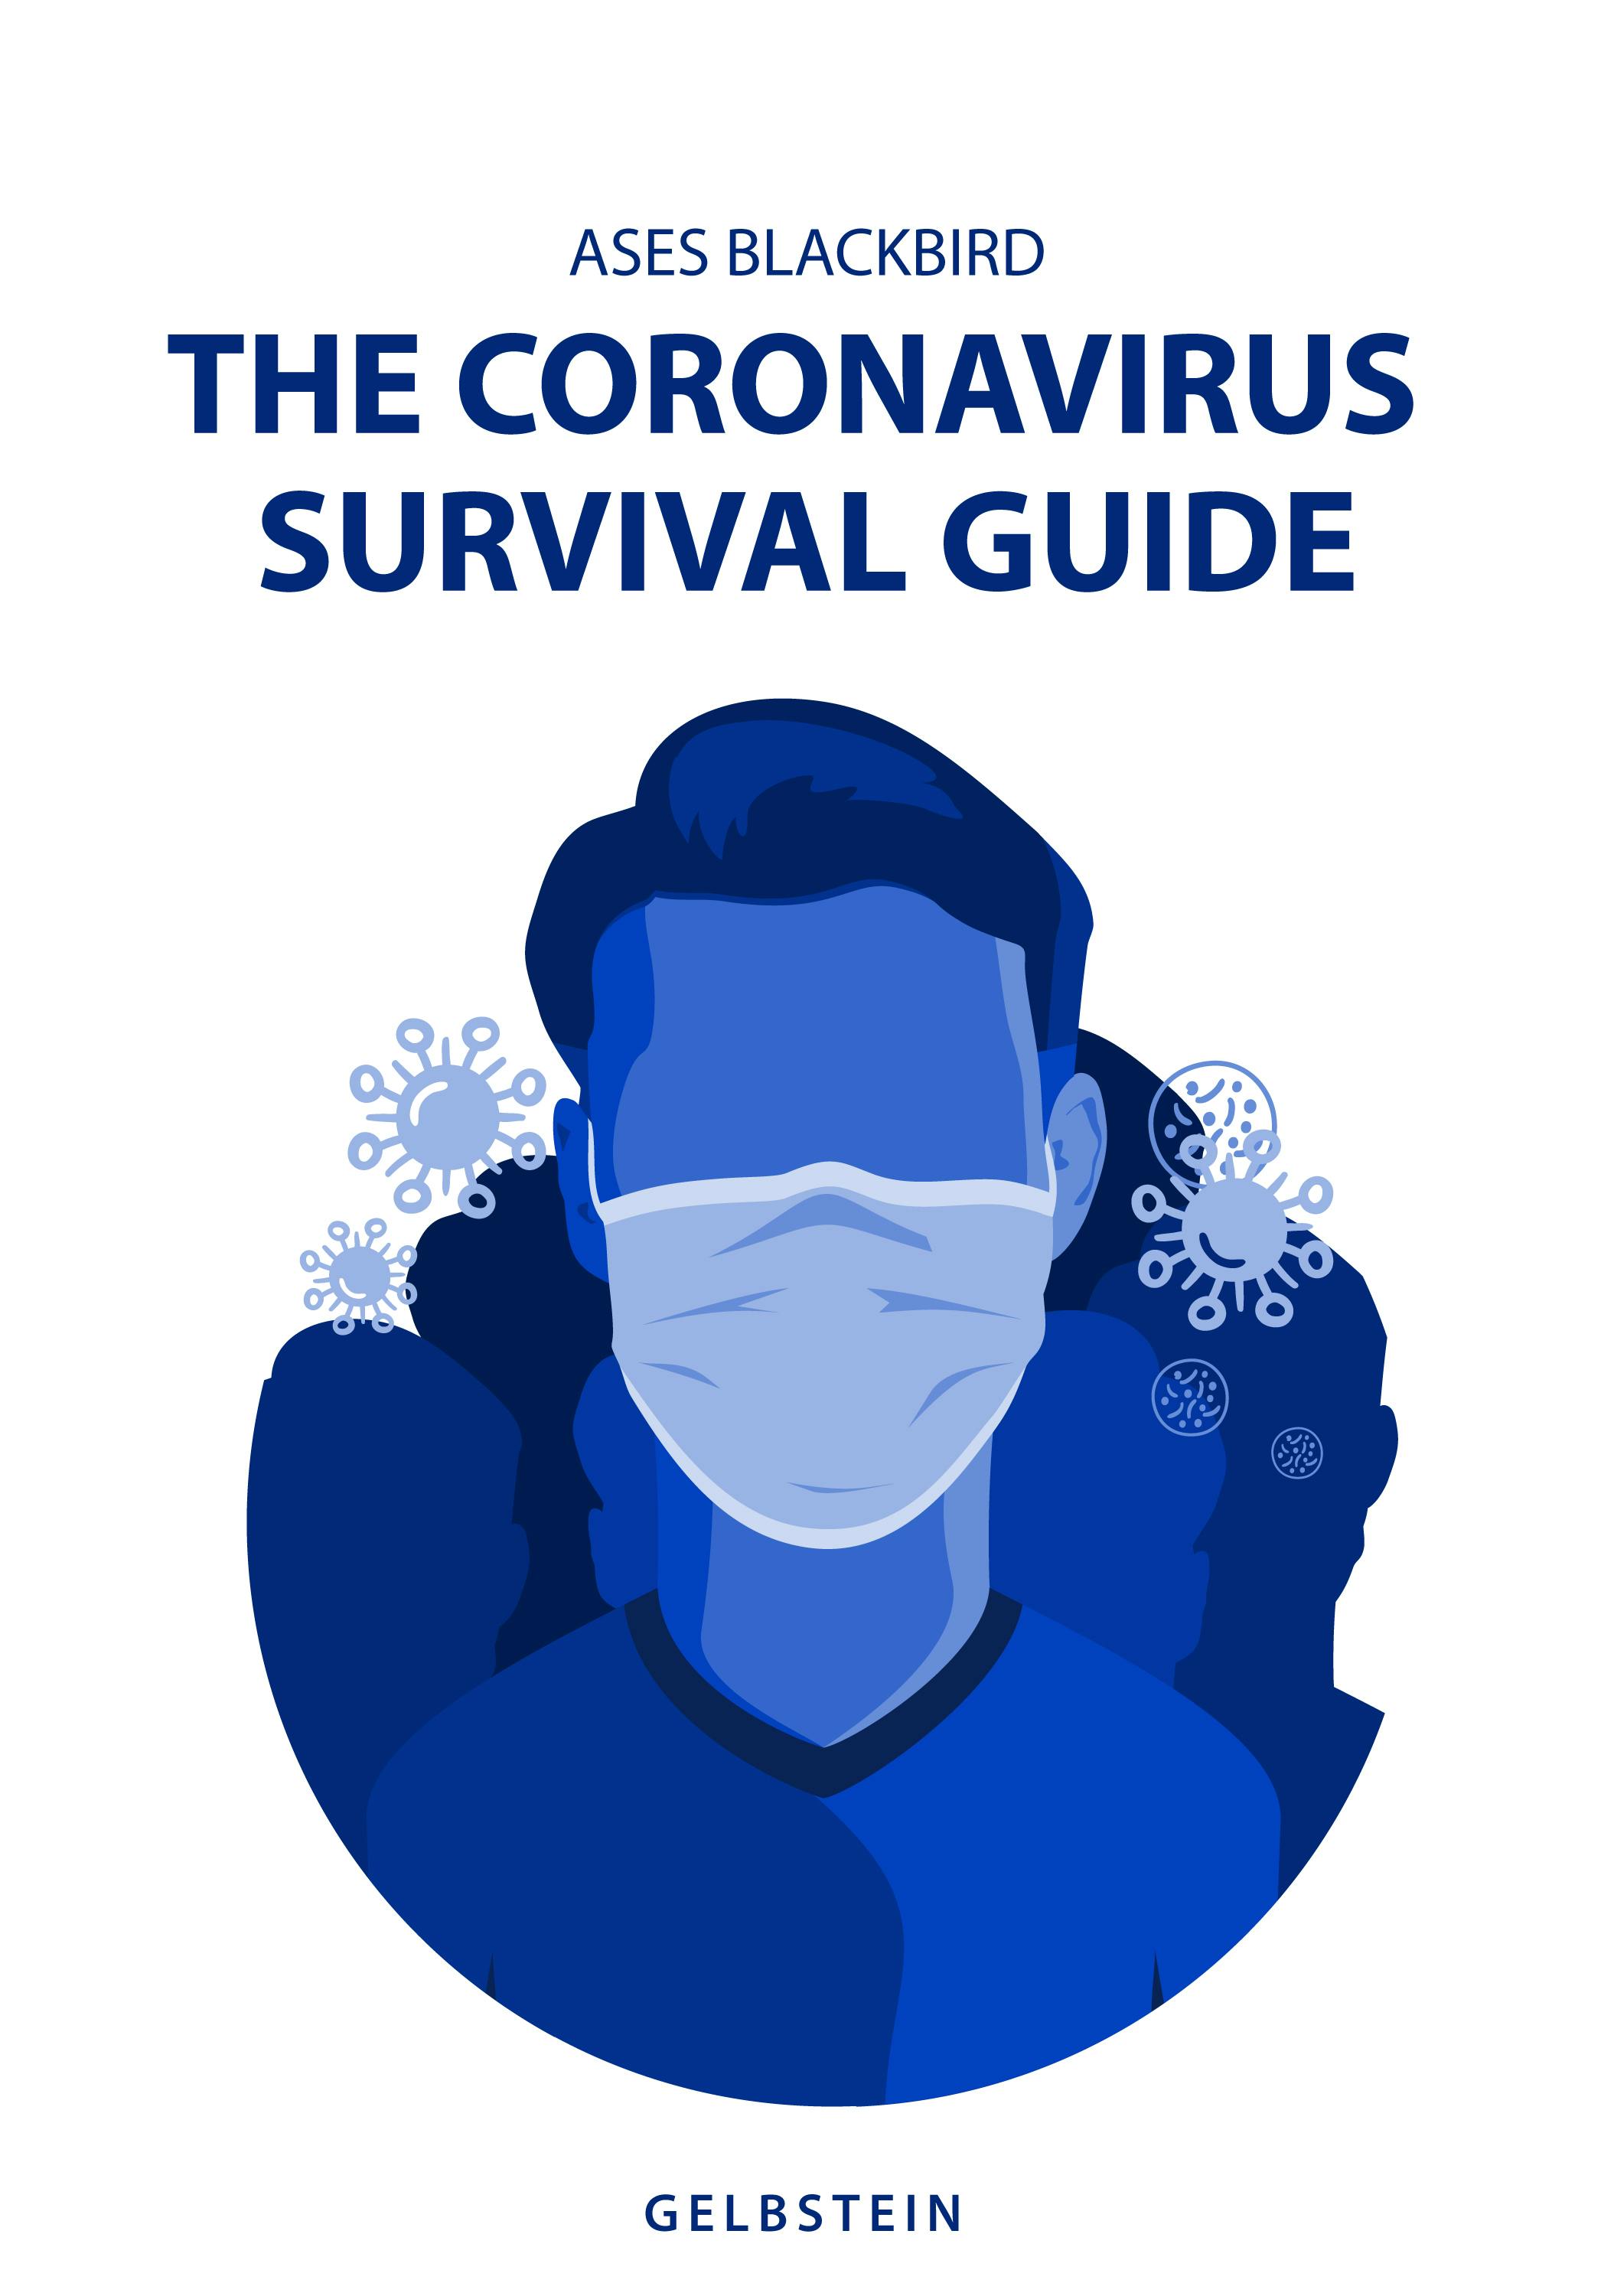 THE Coronavirus survival Guide - ASES BLACKBIRD